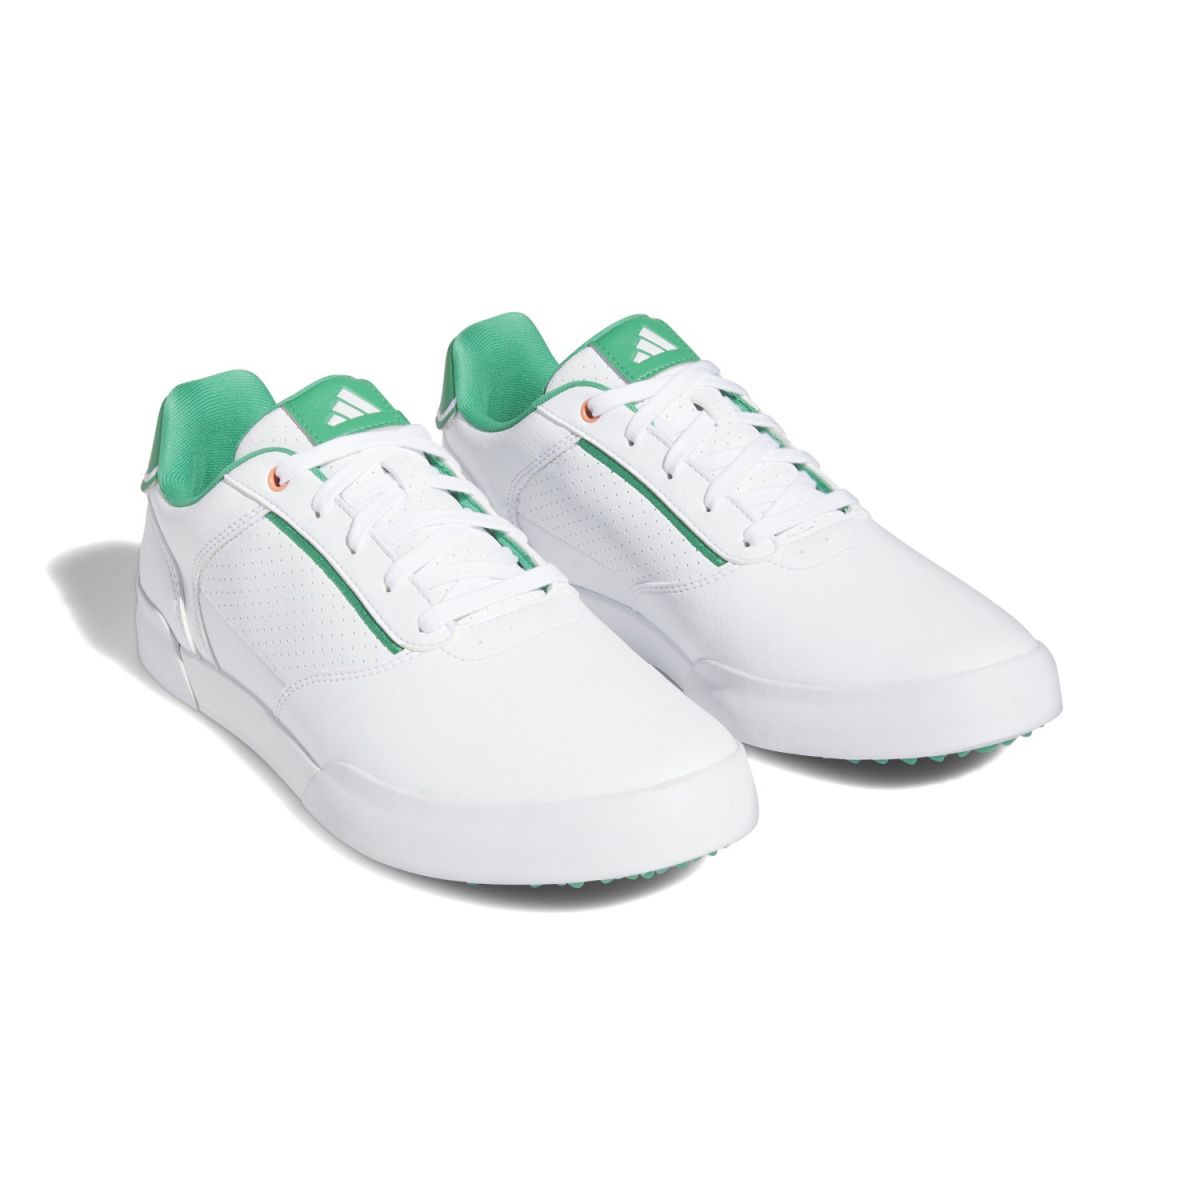 adidas retrocross white green 41 13